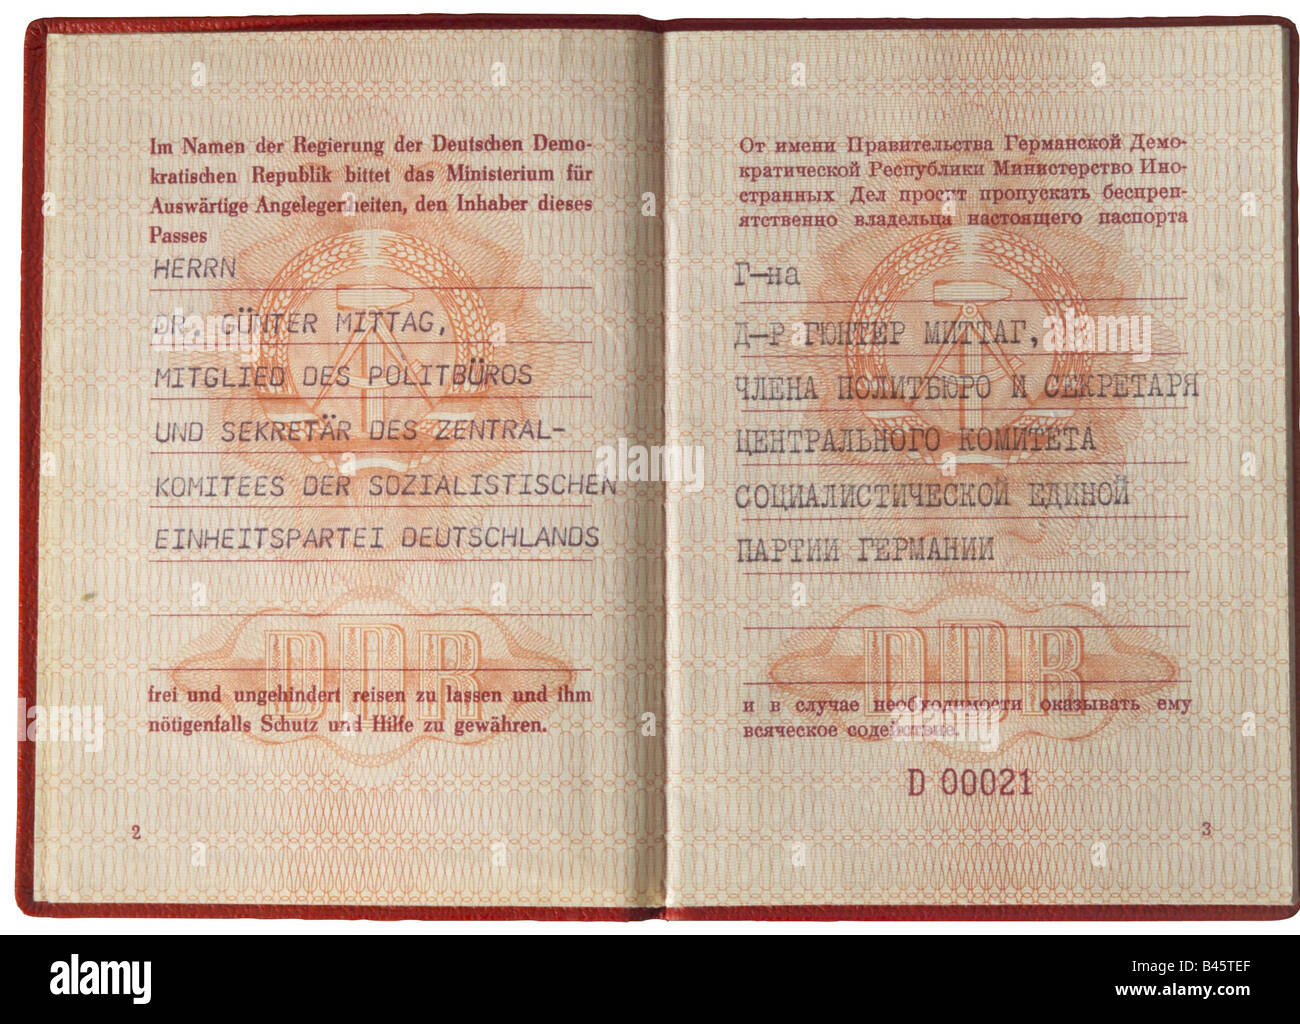 Mittag, Günther, 8.10.1926 - 48.3.1994, German politician (SED), his diplomatic passeport, Berlin 10.11.1976, 20th century, , Stock Photo